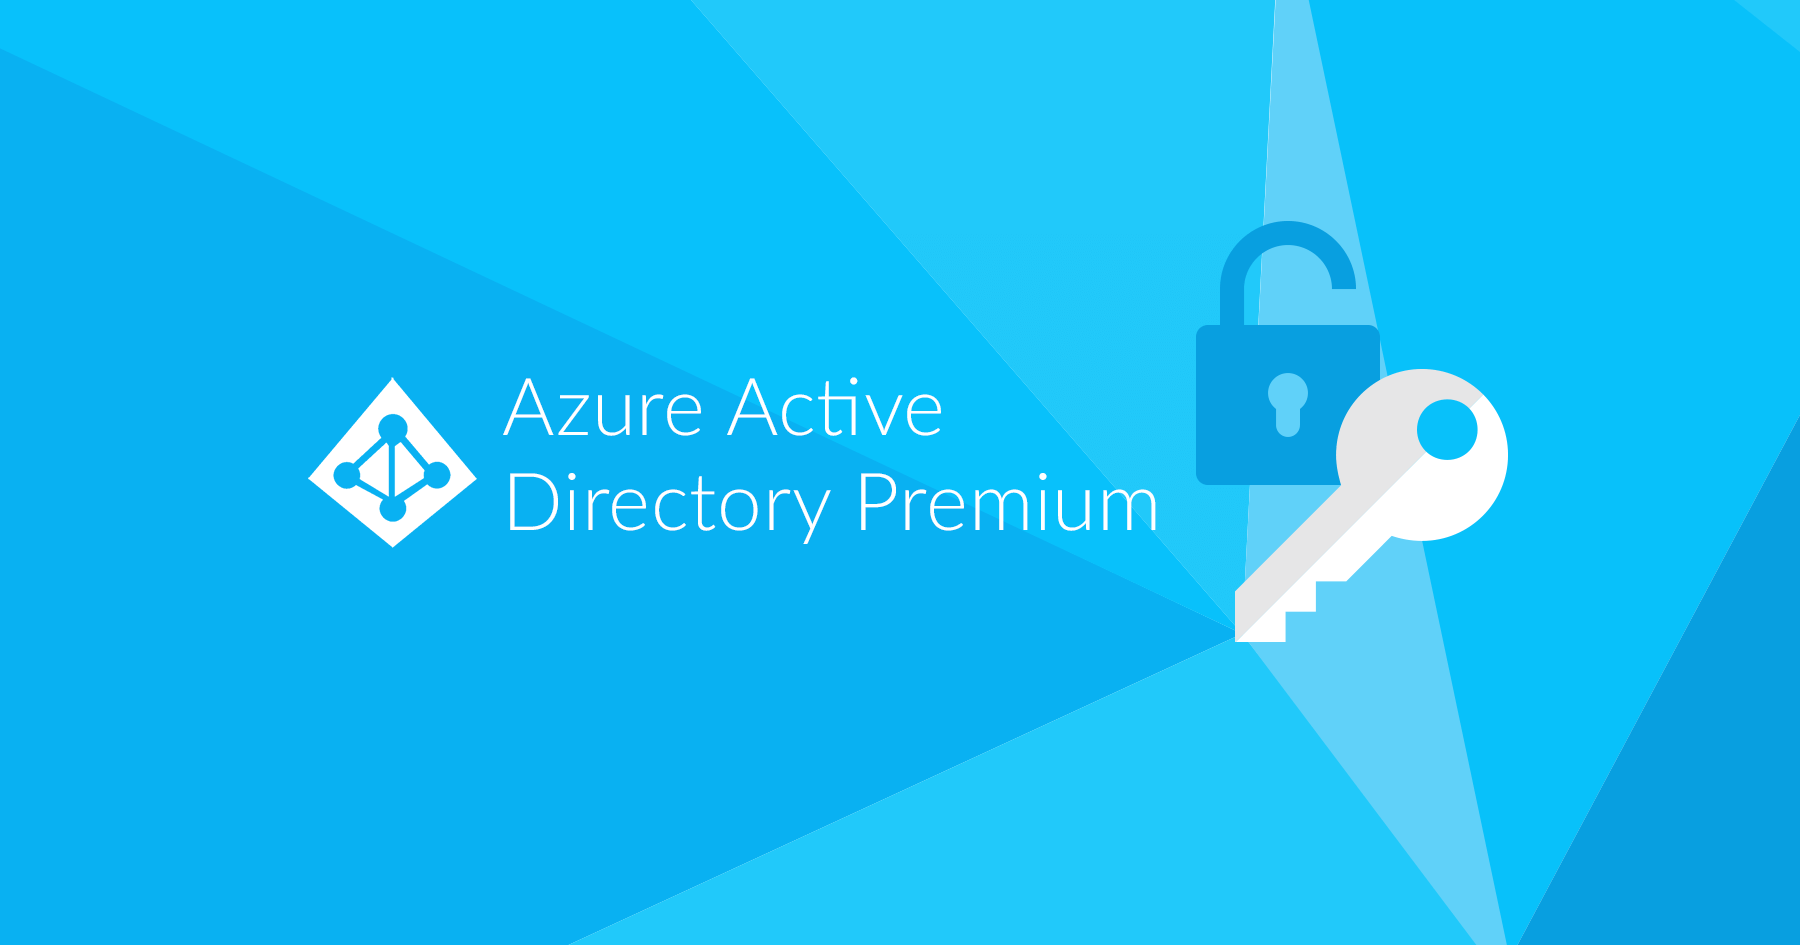 Azure AD Logo - Self-serve Password Reset with Azure Active Directory Premium